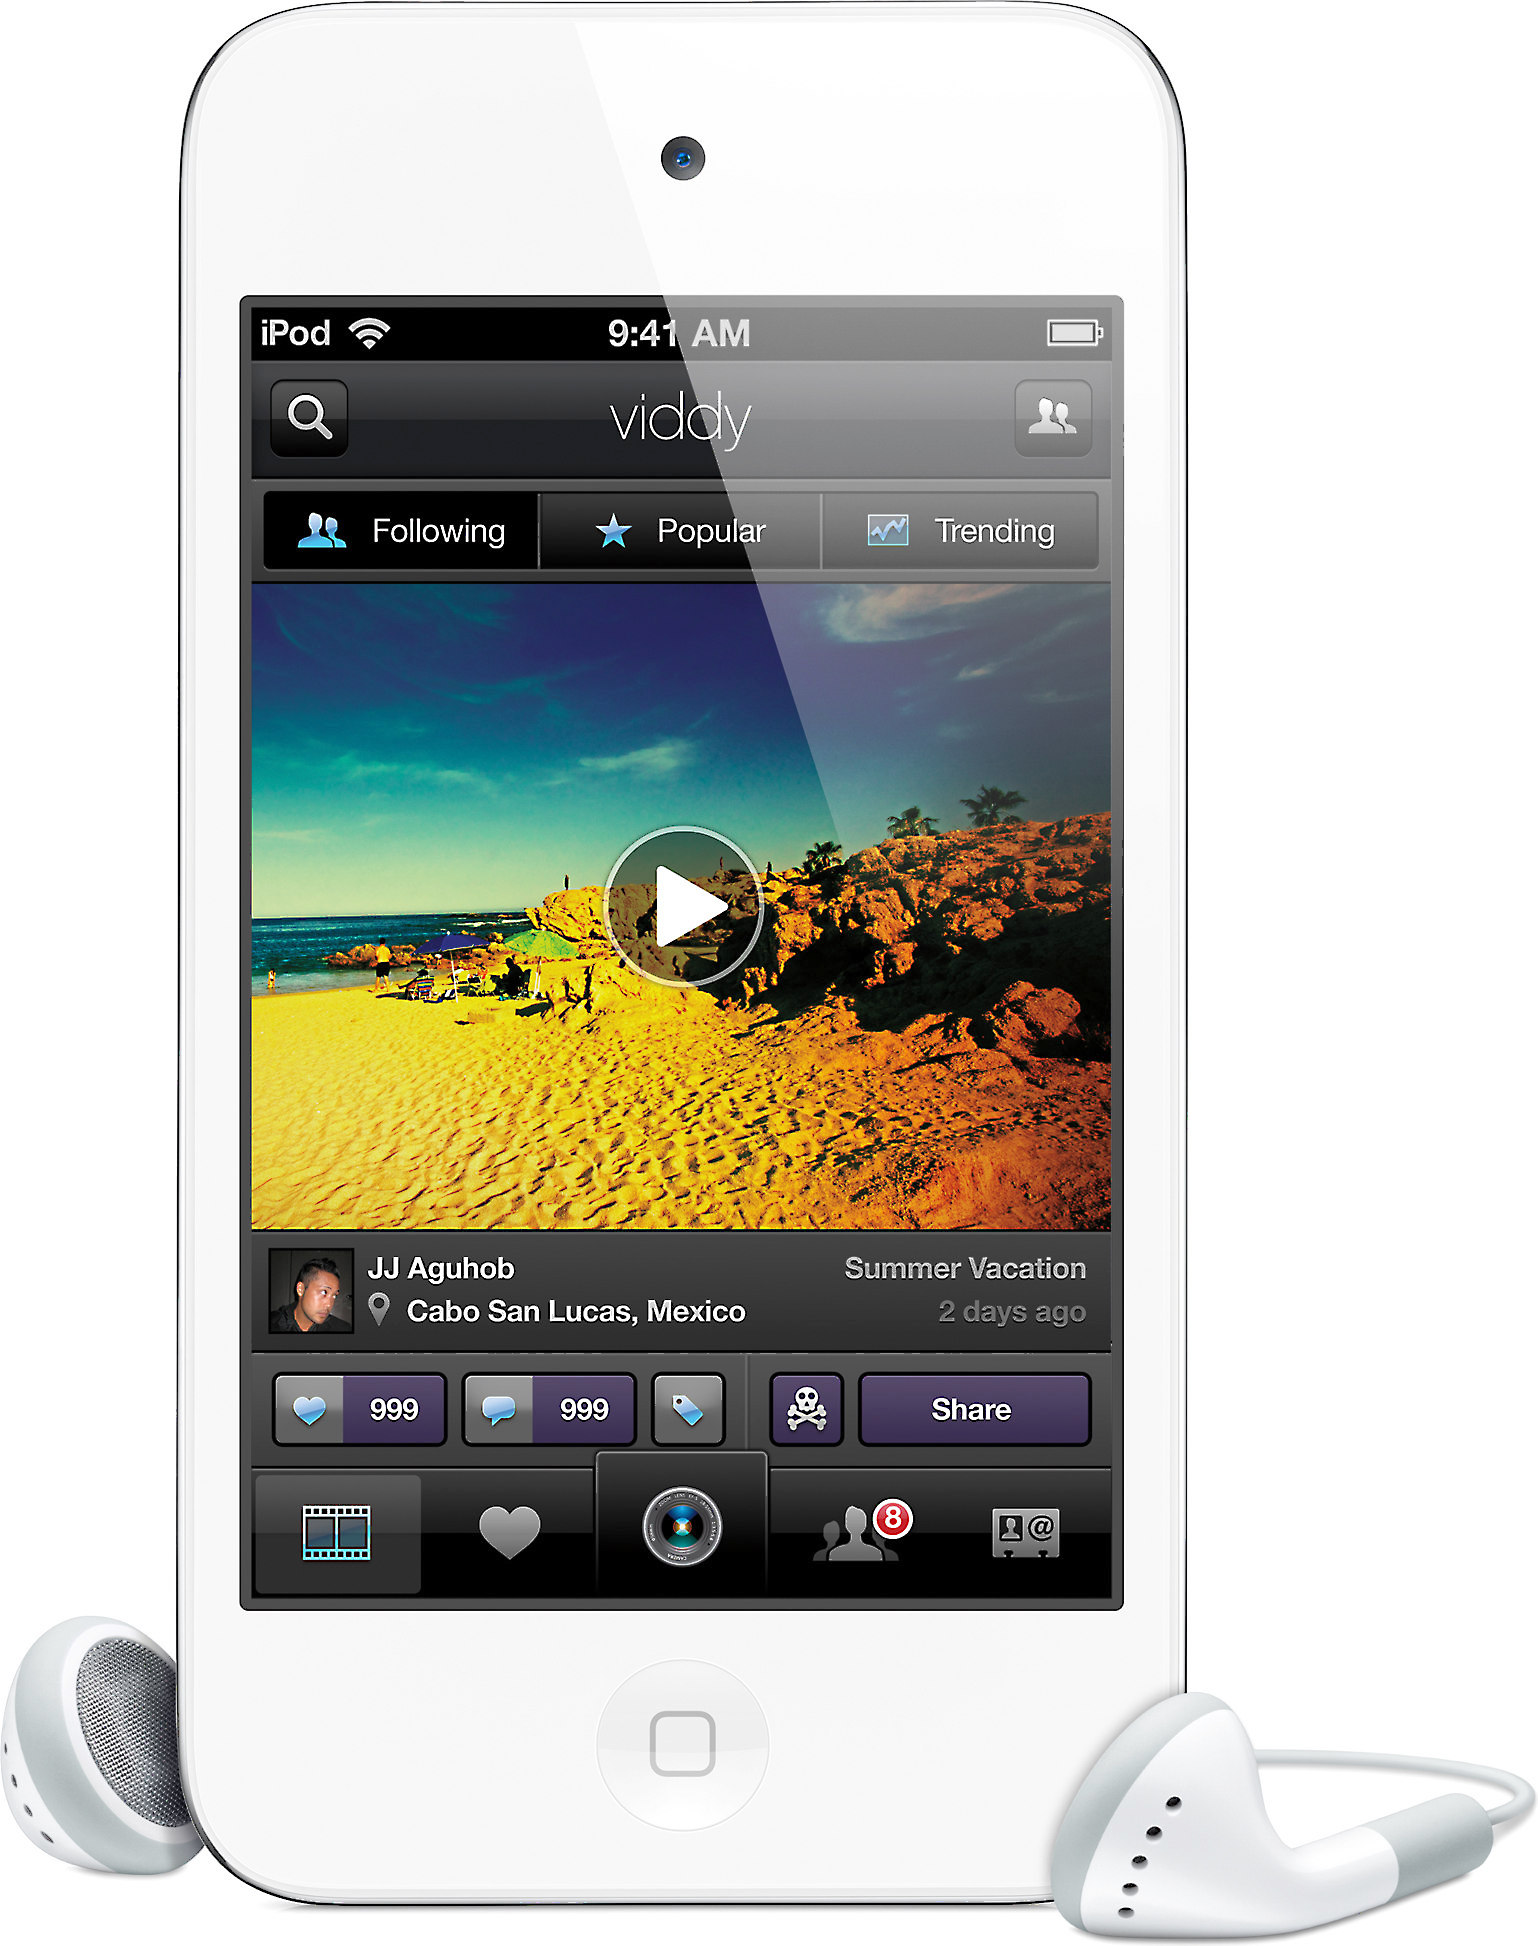 Apple Ipod Touch 4th Generation 3.5 MP4 Player 8GB Dual Camera Bluetooth Wi-Fi MP4